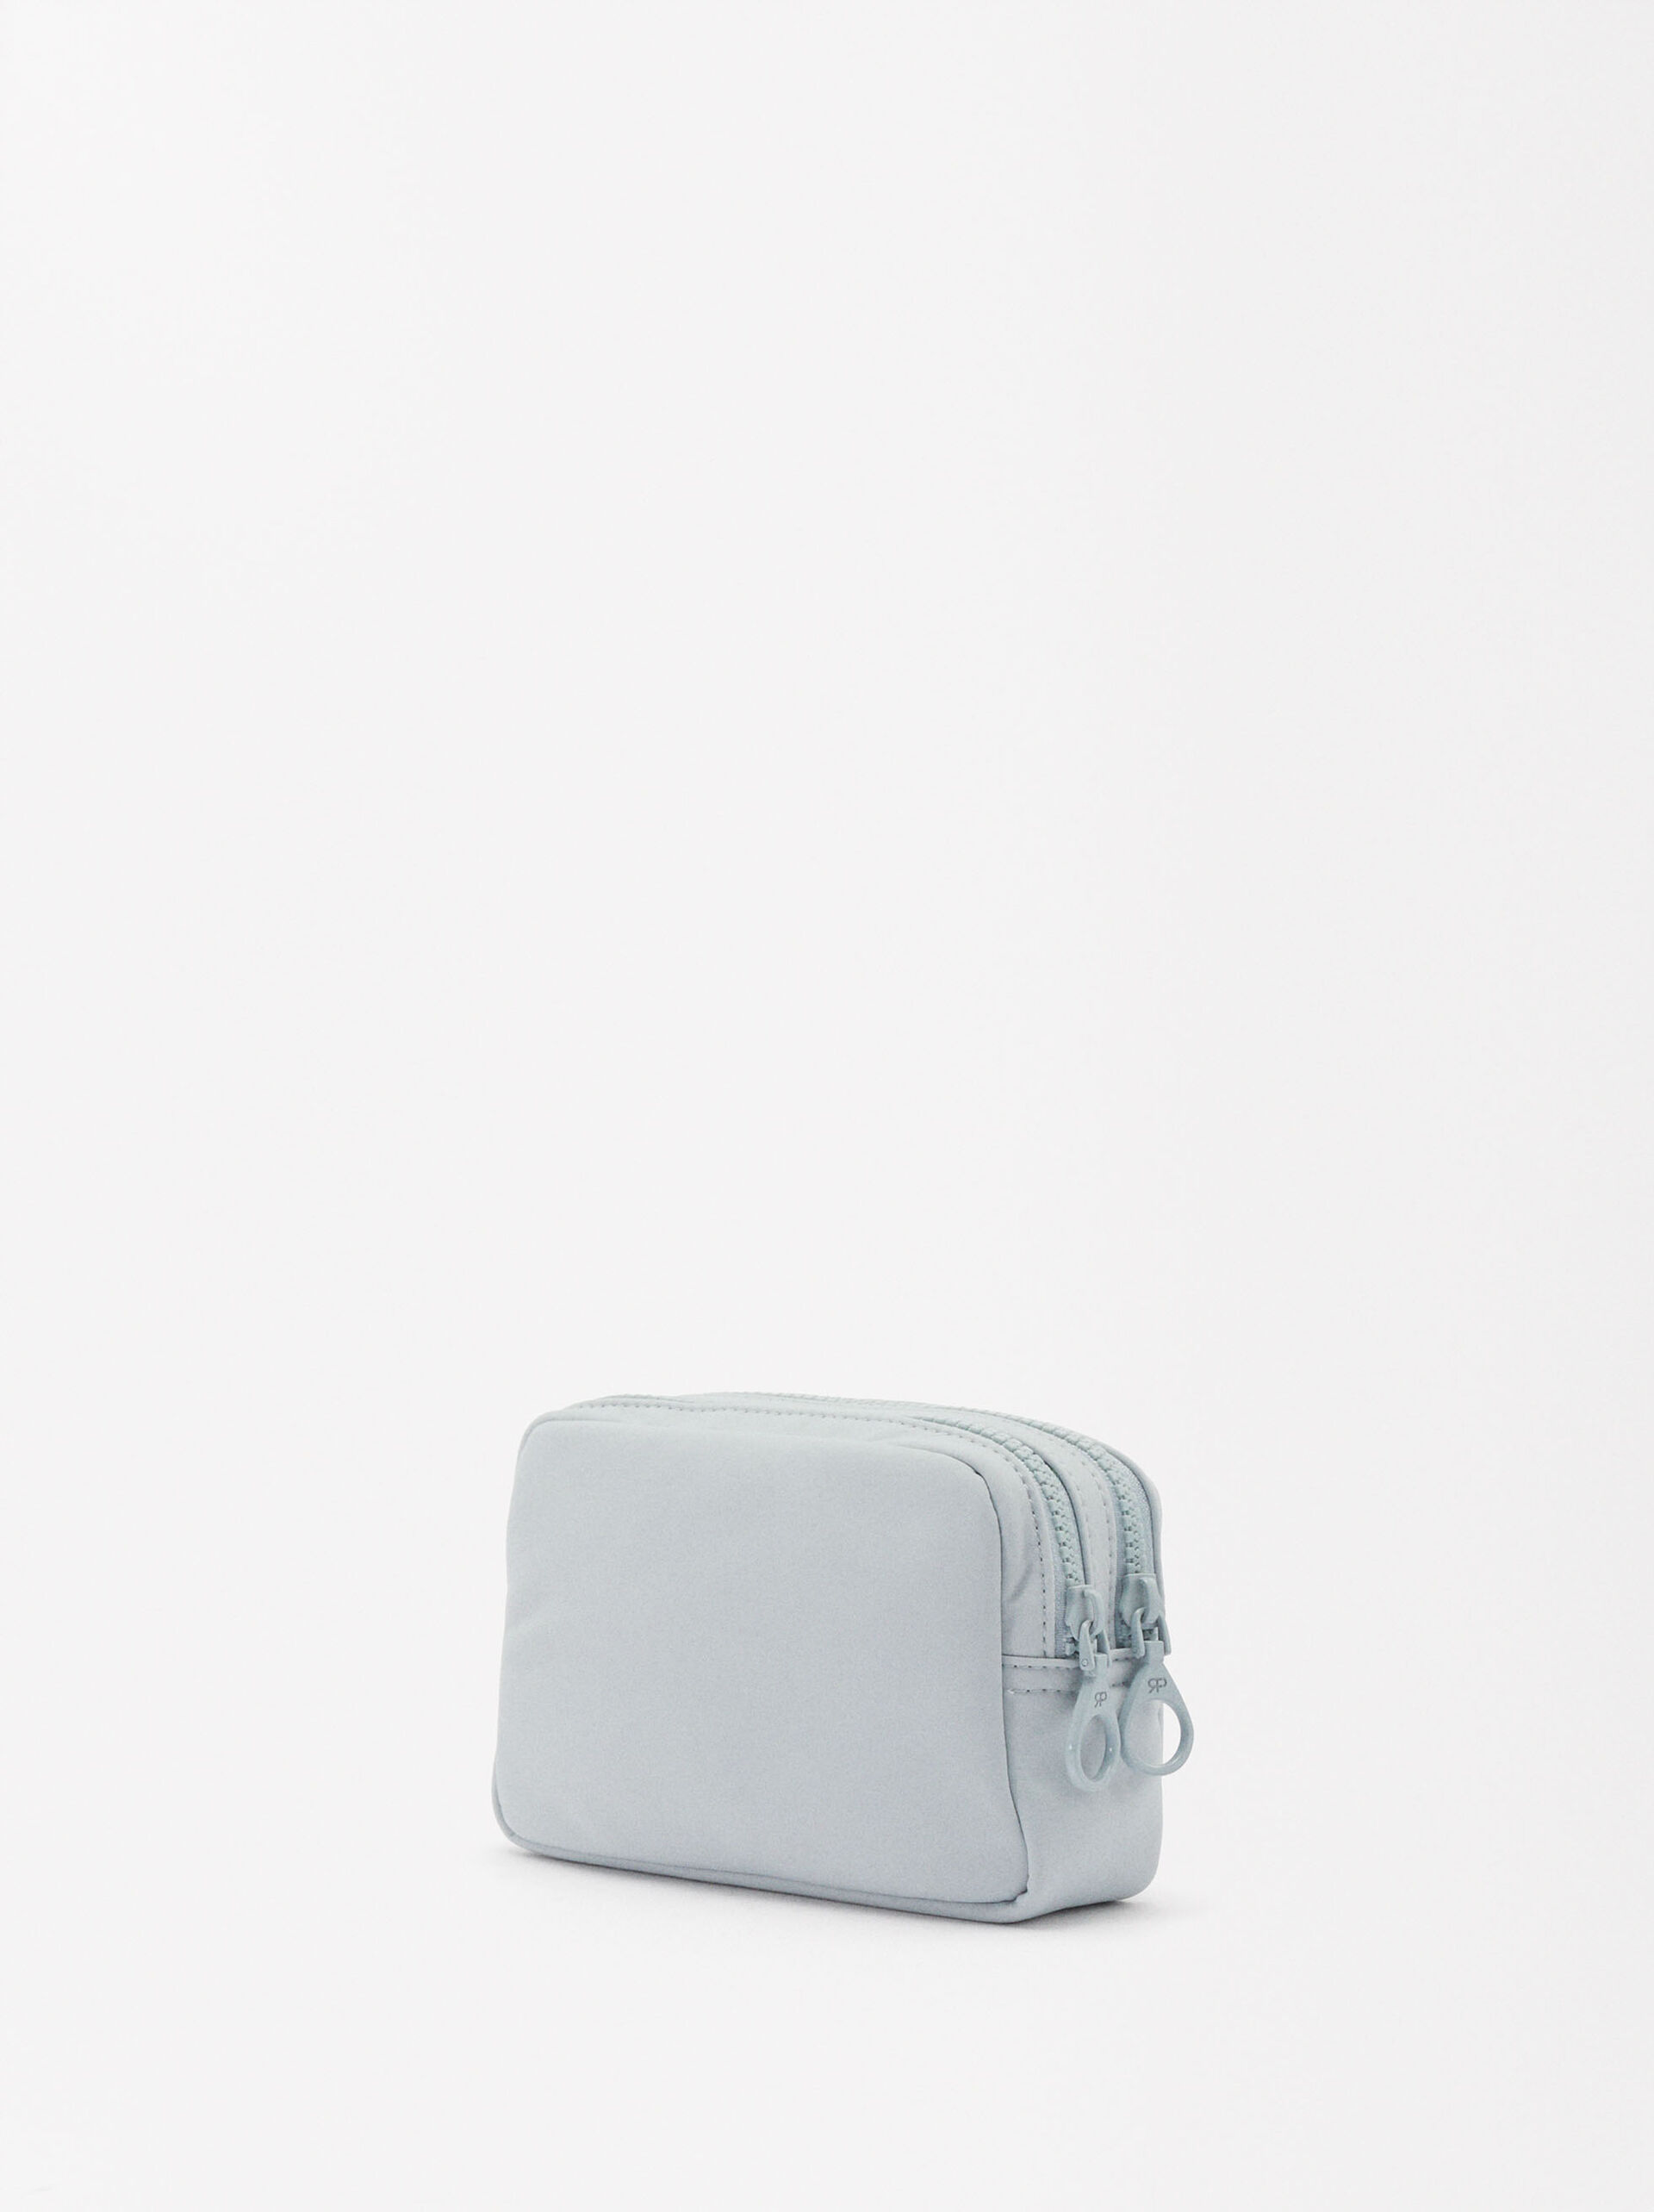 Nylon Multi-Purpose Bag image number 1.0